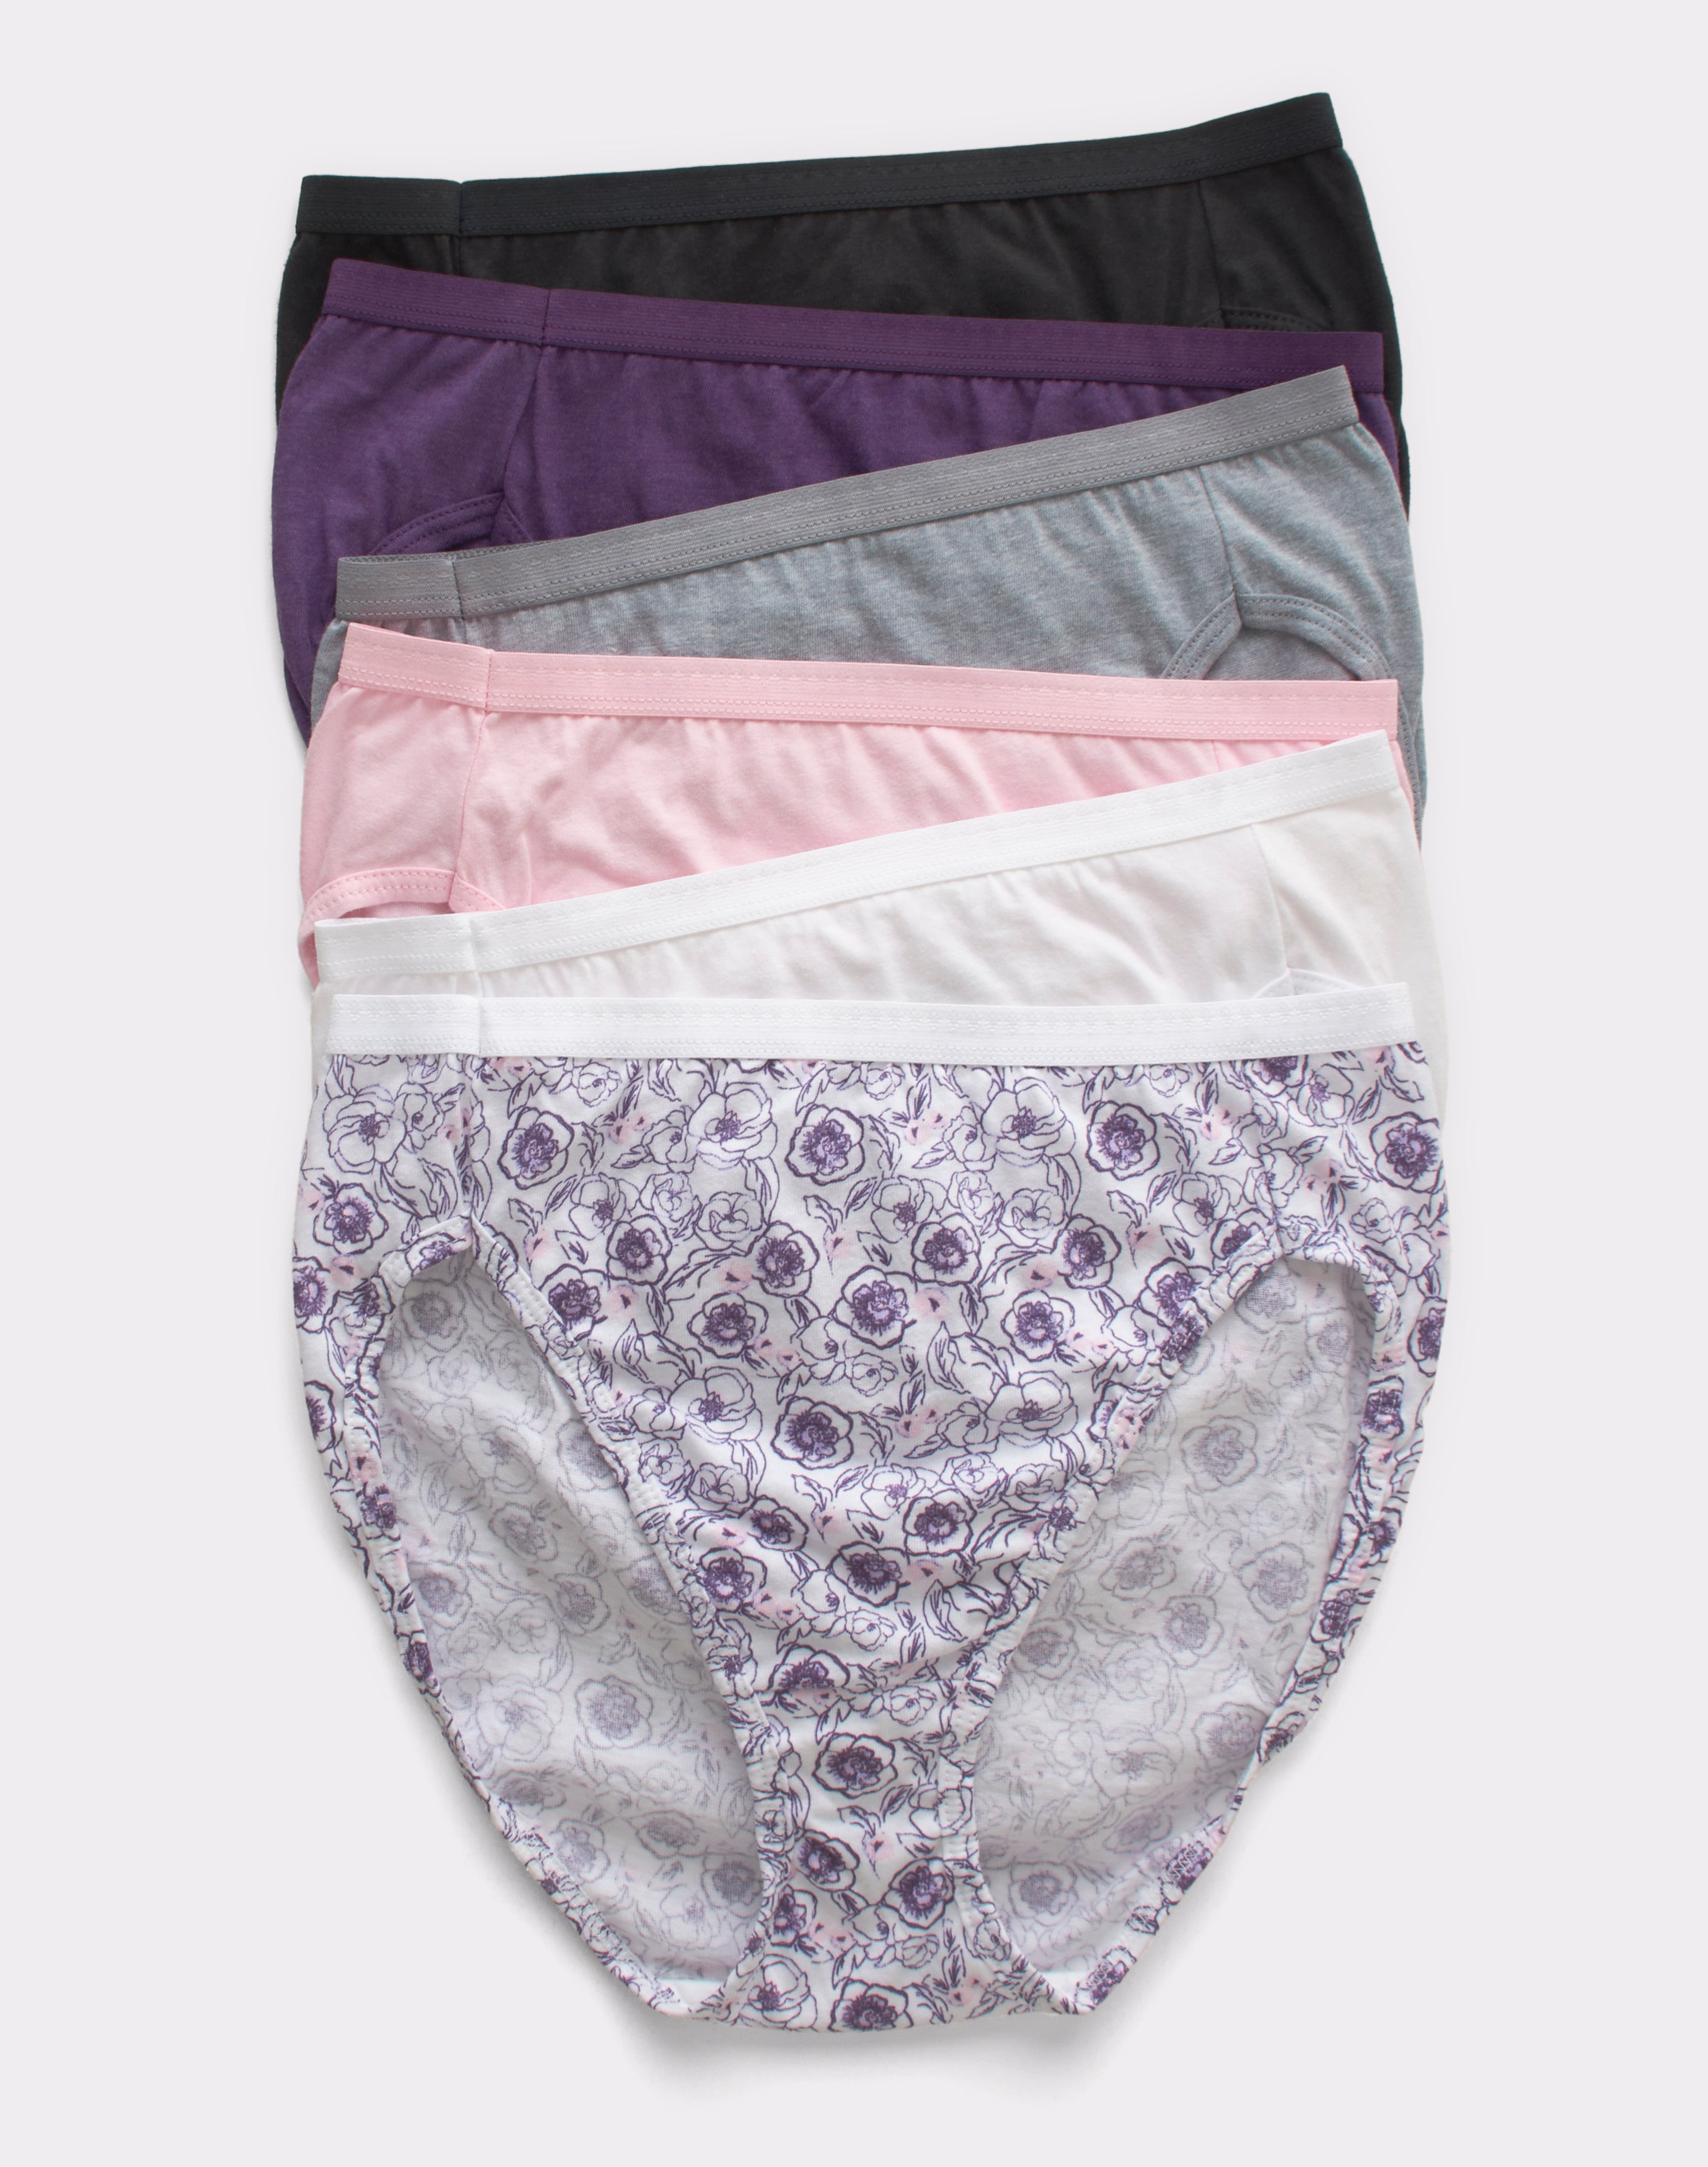 Hanes Ultimate Women's Breathable Hi-Cut Underwear, 6-Pack Sugar Flower  Pink/White/Concrete Heather/Black/Purple Vista Heather/Purple Floral Print 5